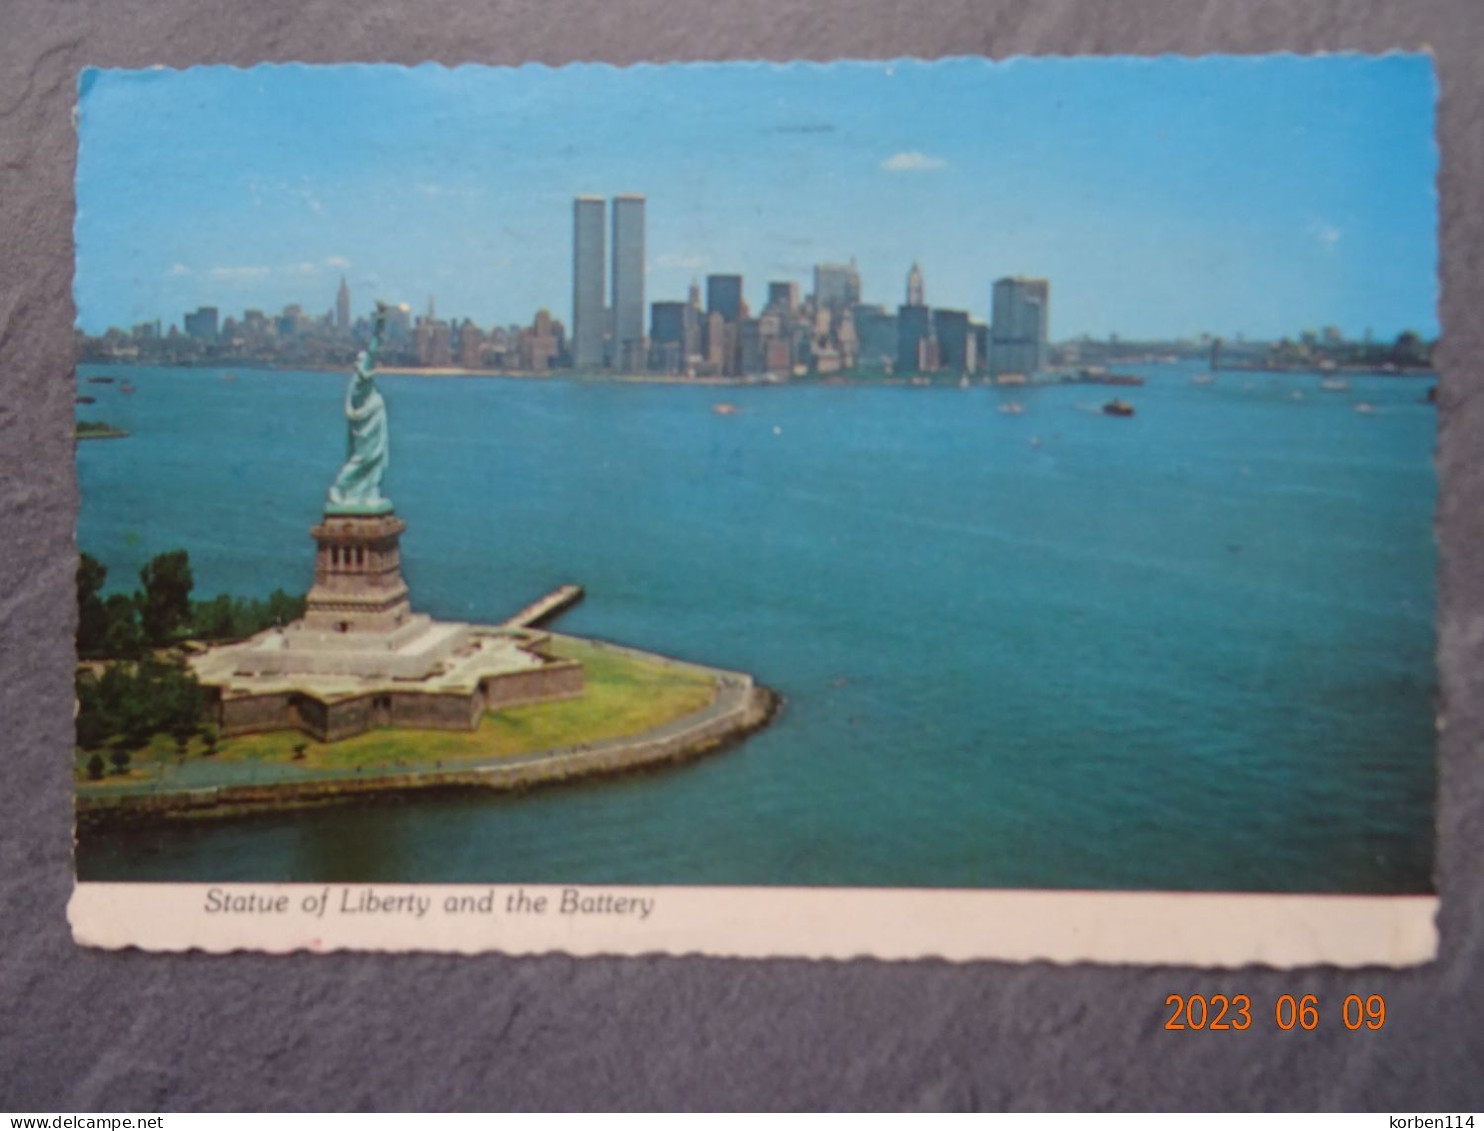 STATUE OF LIBERTY - Statue Of Liberty